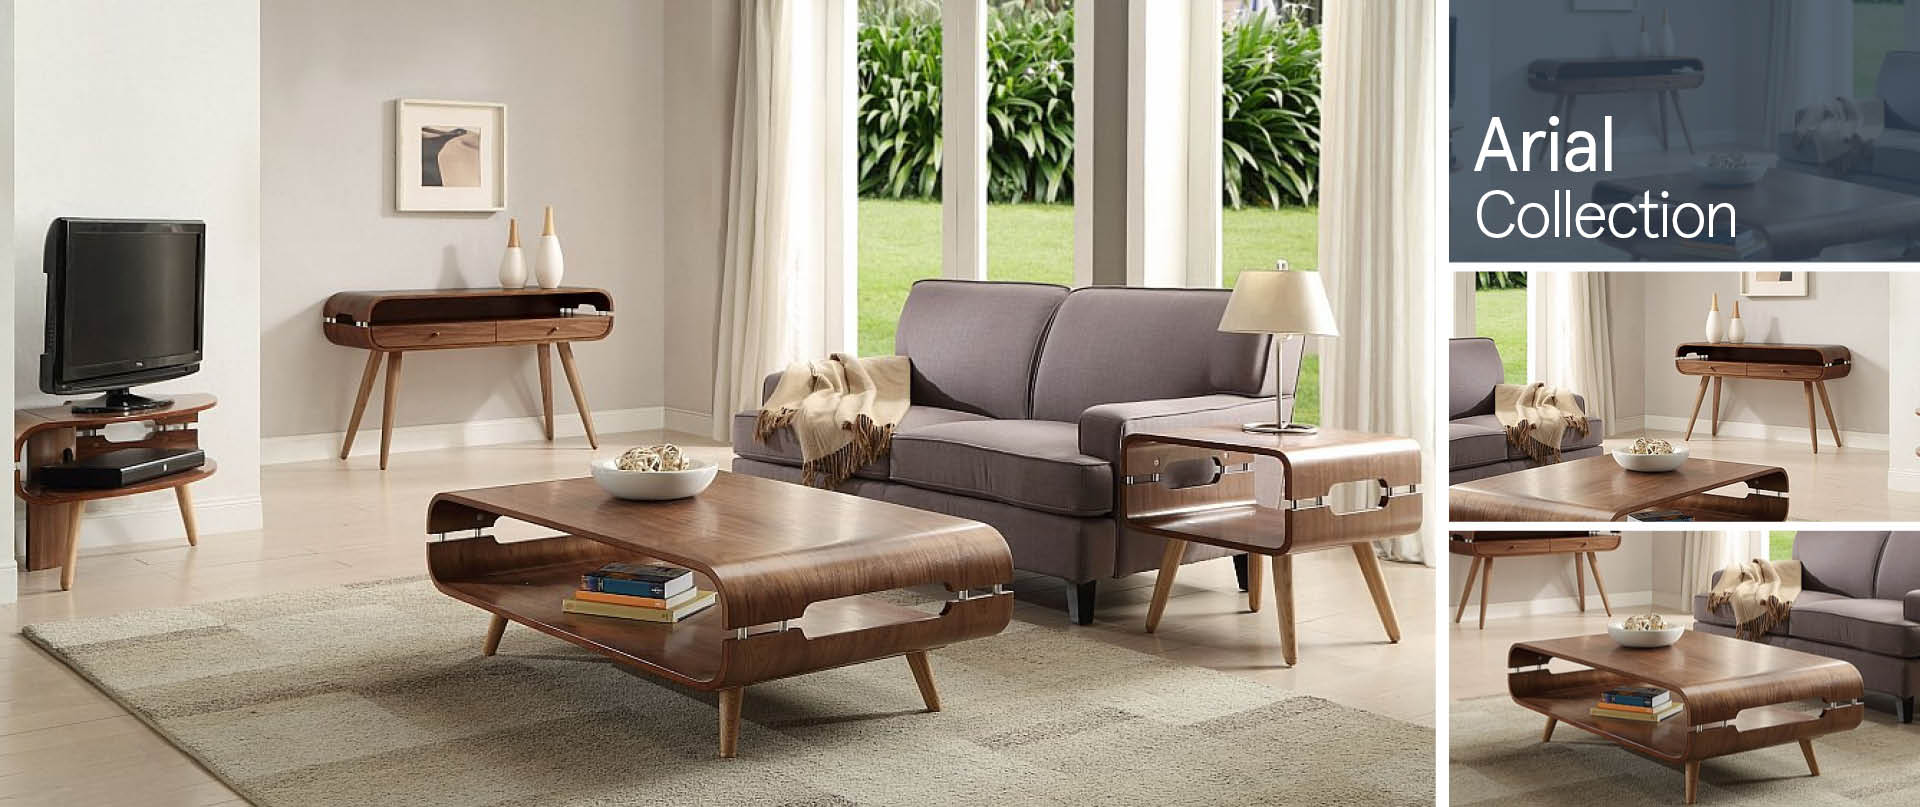 Arial Living Room Furniture Ranges